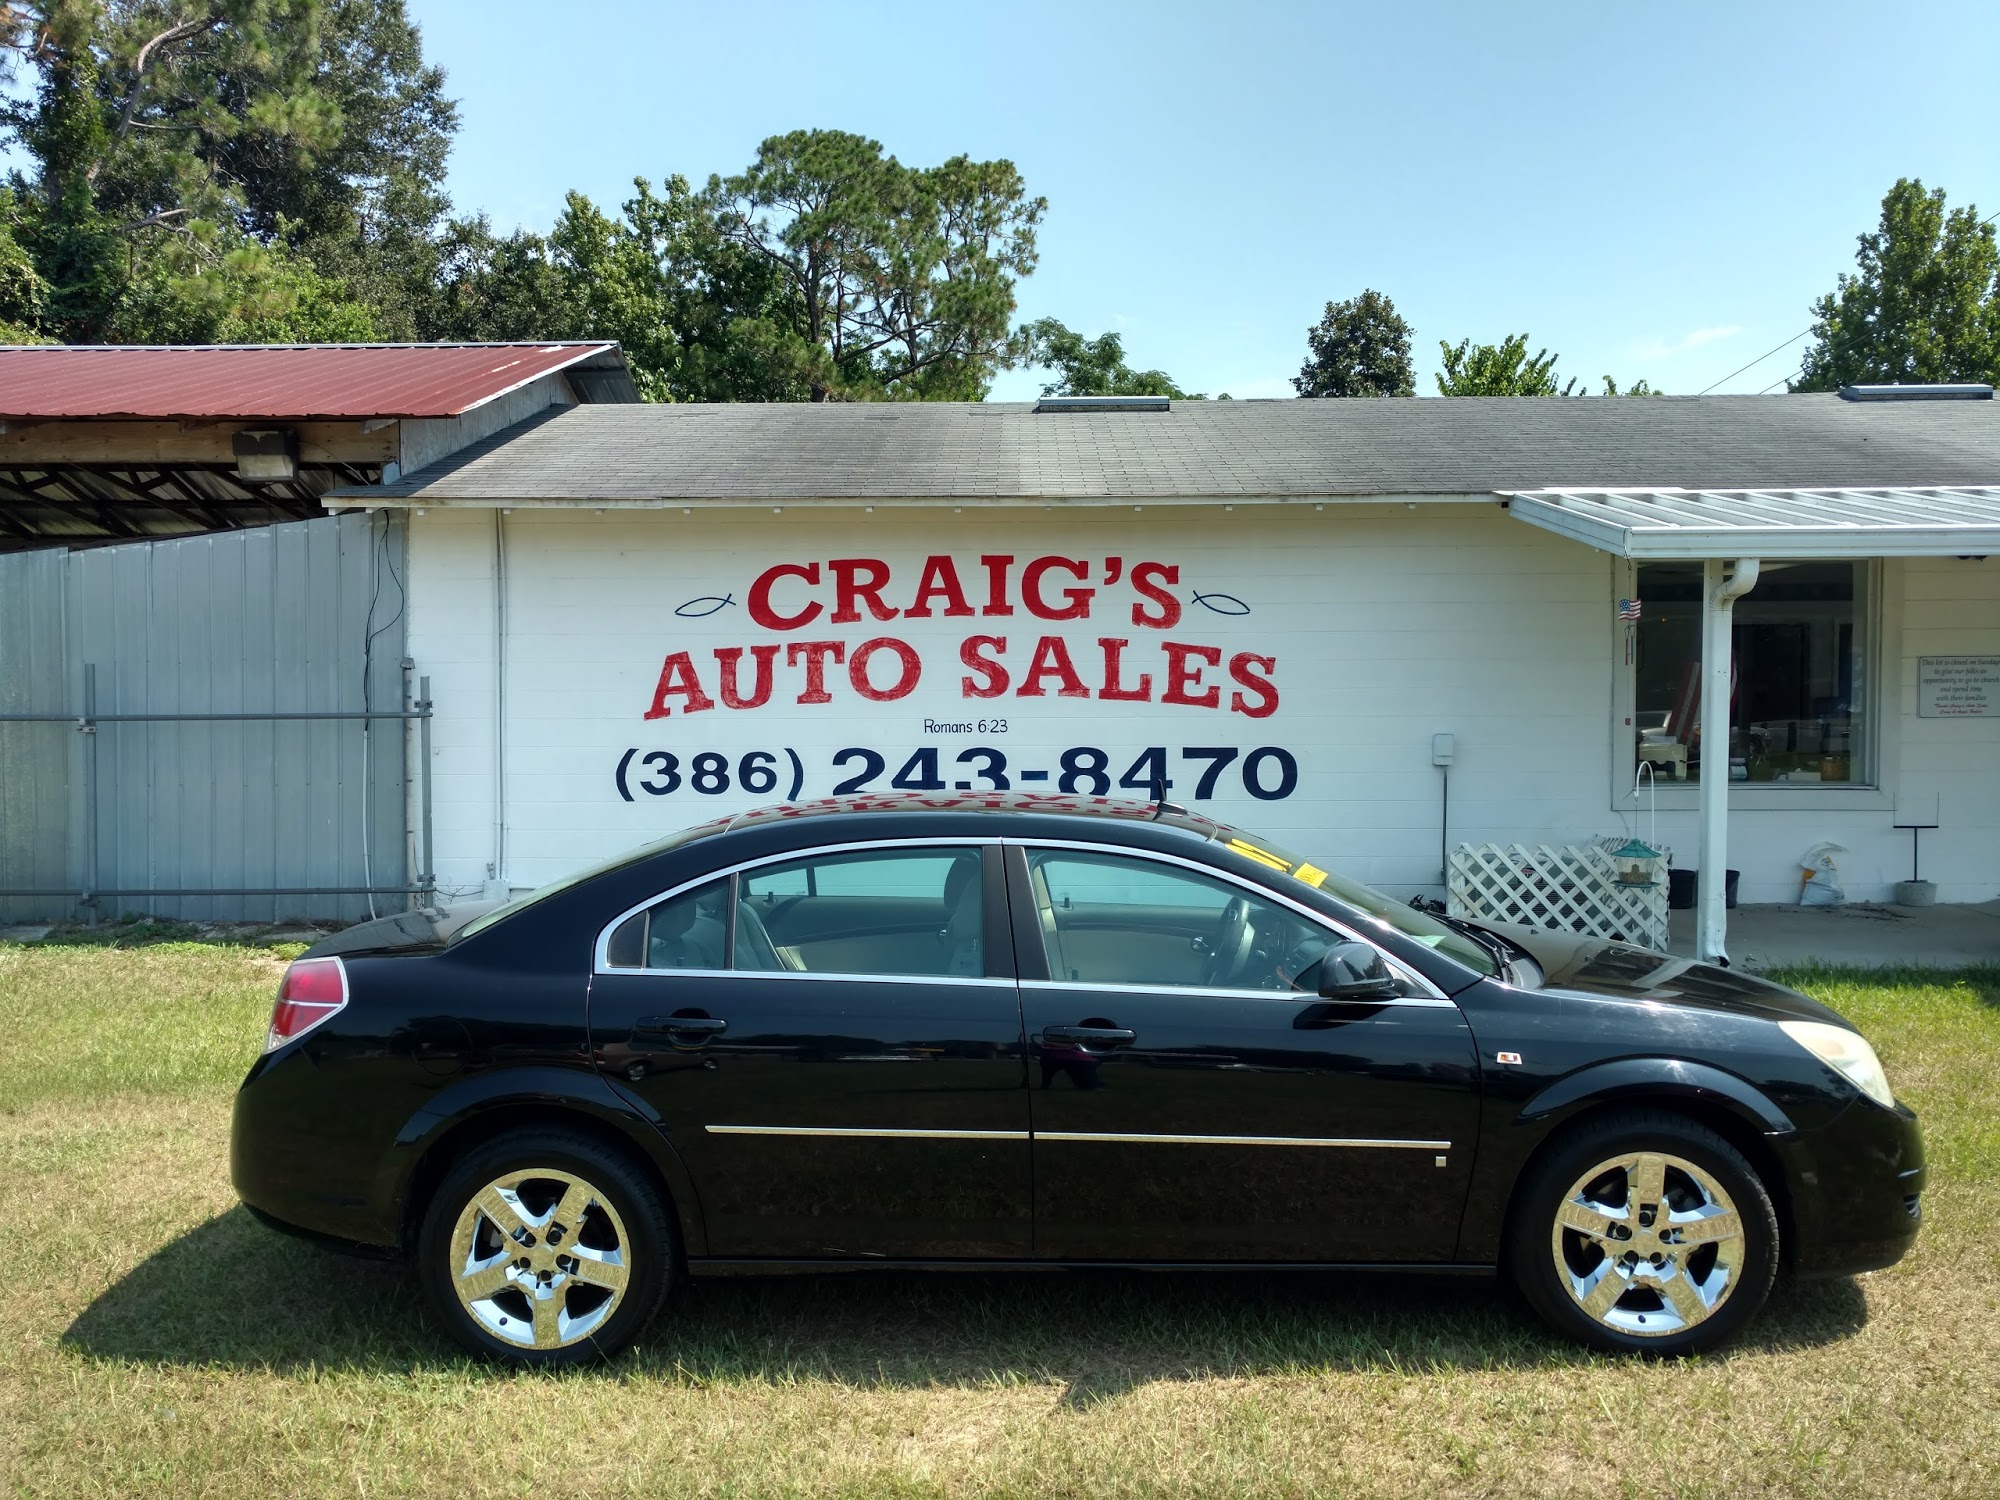 Craig's Auto Sales Inc.